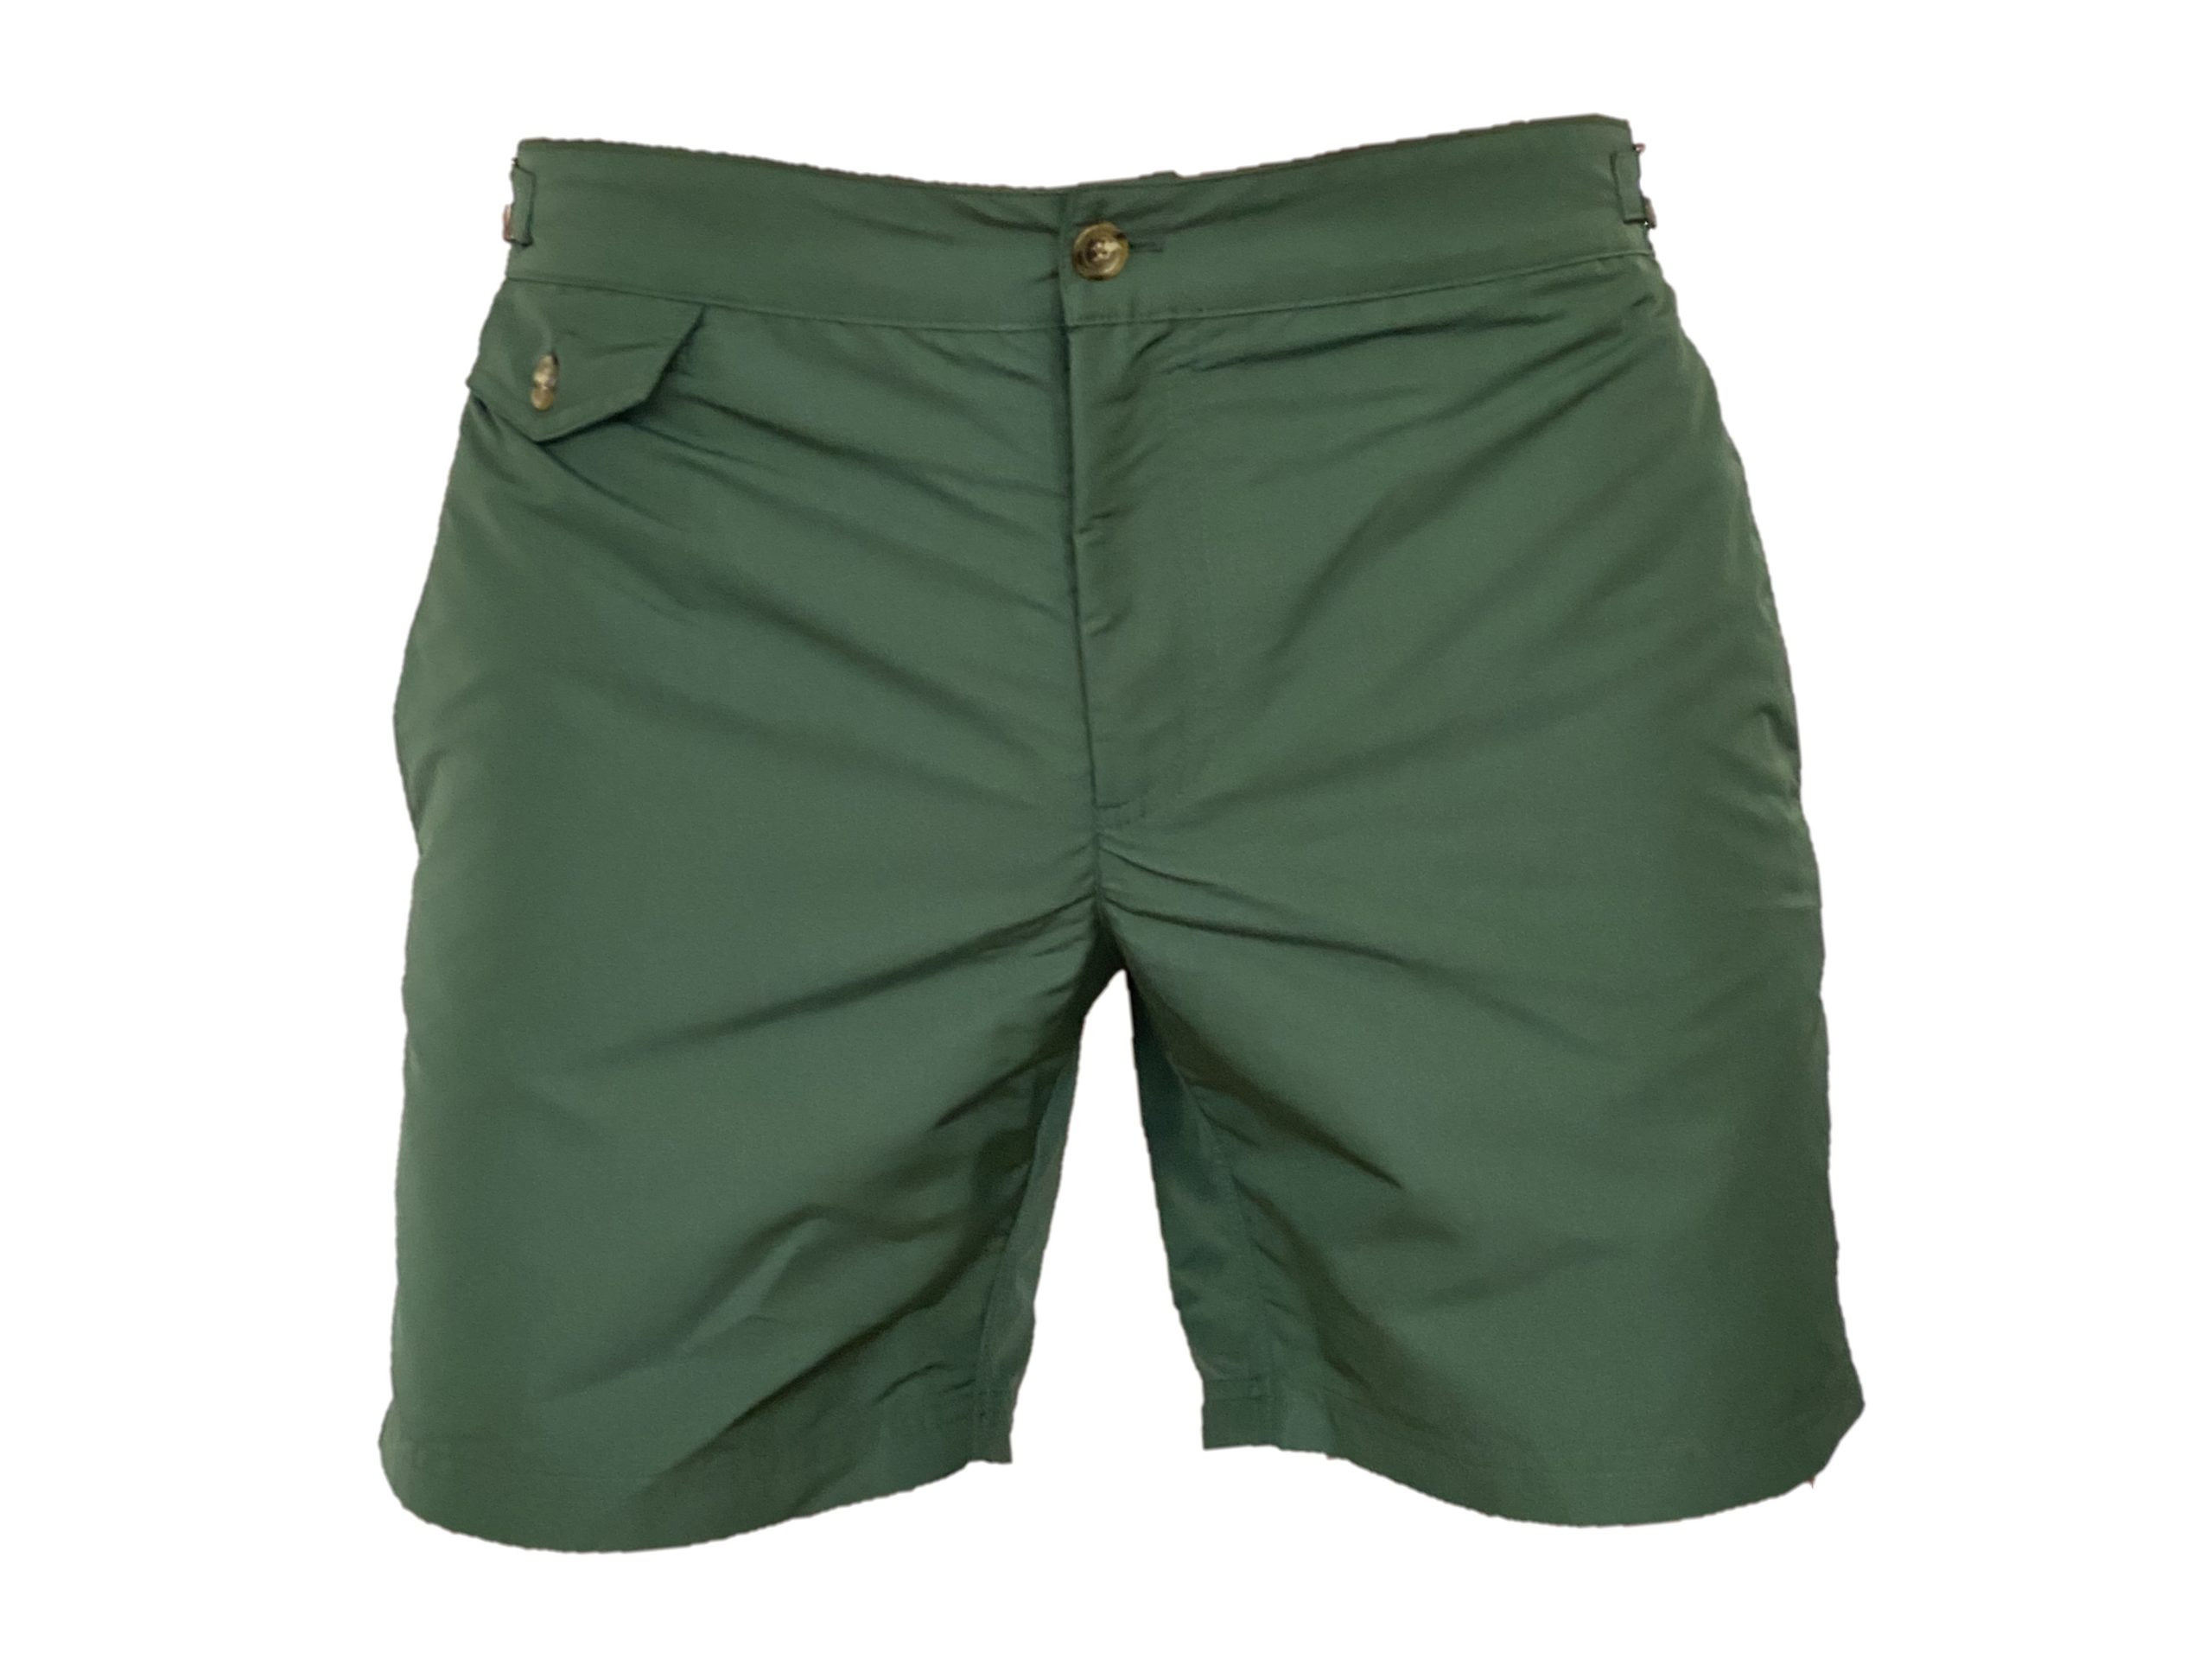 spring green swim shorts